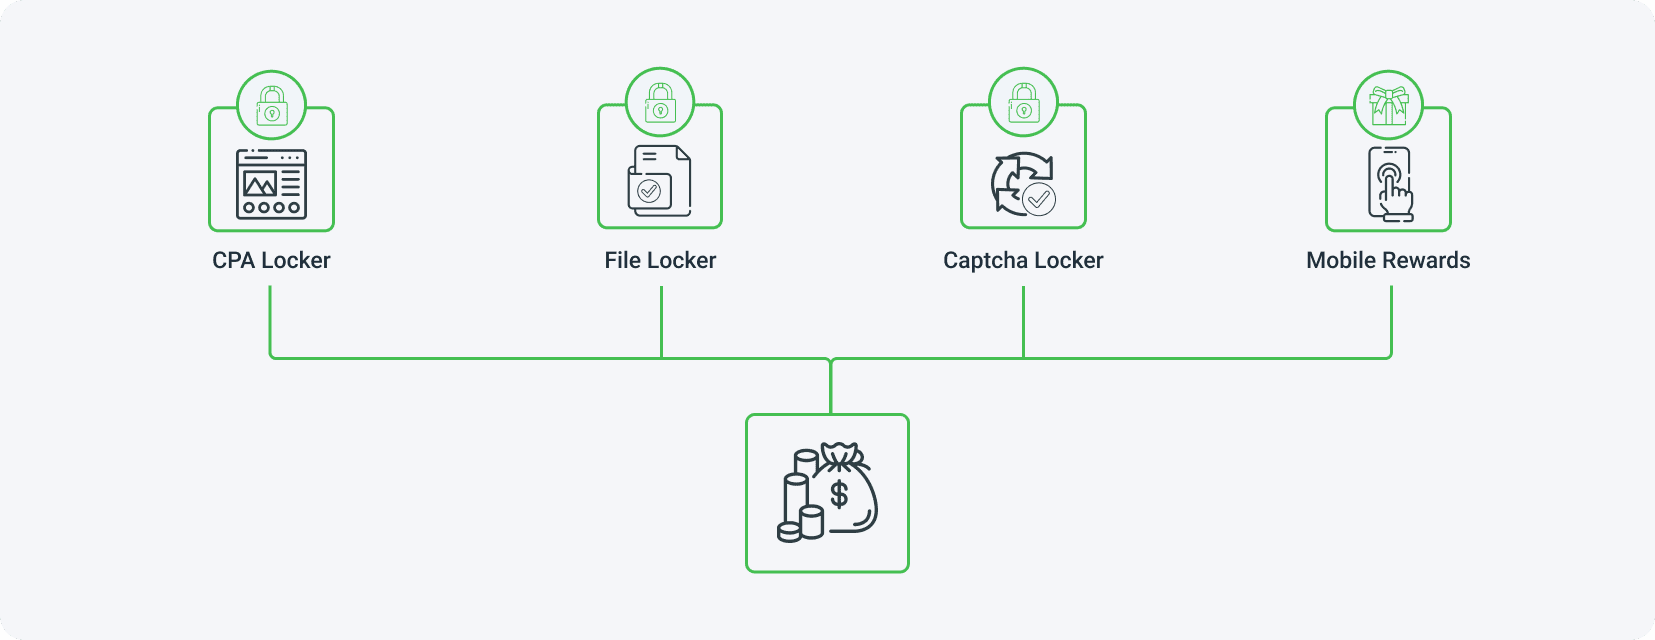 MyLead предлагает четыре вида контент локеров: CPA Locker, File Locker, Captcha Locker и Mobile Rewards.